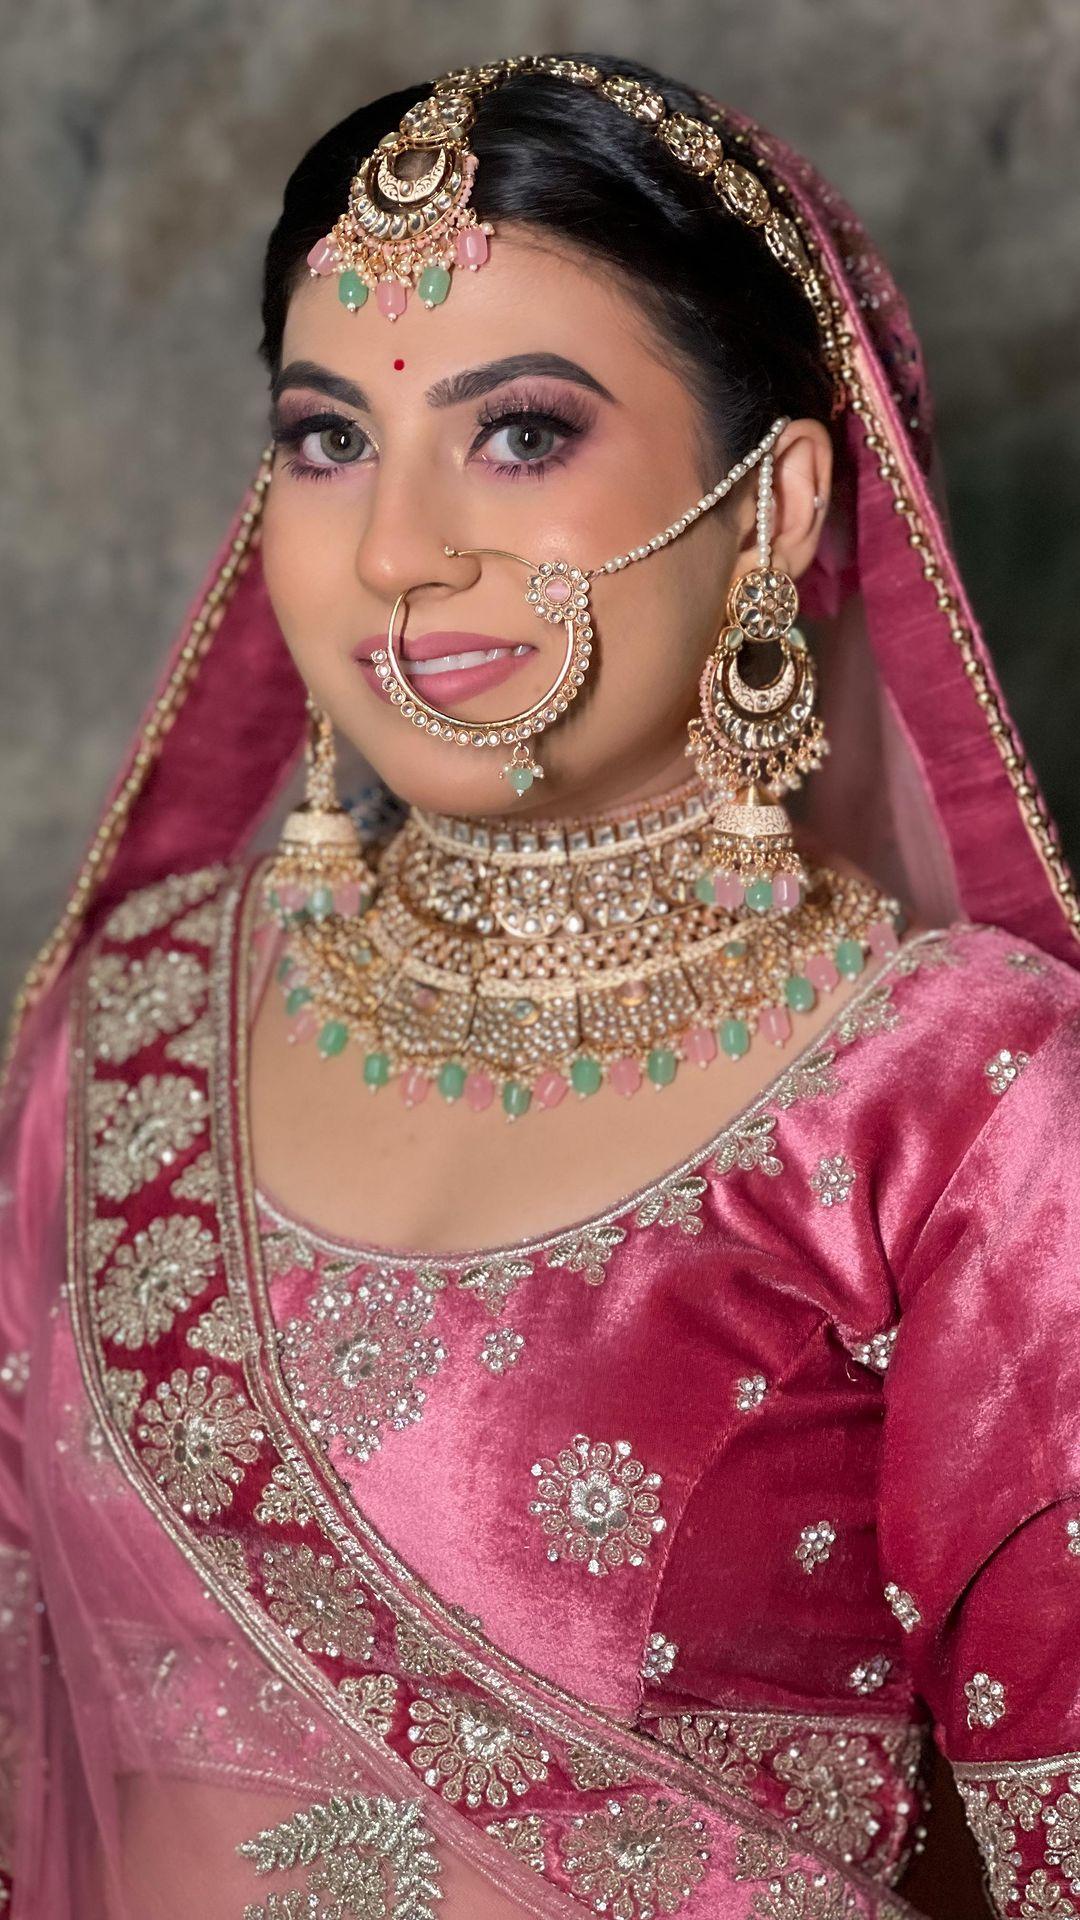 class="content__text"
 Bride Shefali looking absolutely gorgeous in rose pink🌸🤍

Makeup : @priyanshisonimua 
.
.
.
.
.
.
.
 #reels #reelsvideo #reelsinstagram #foryou #explore #trending #trendingnow #goviral #trendingreels #makeupartist #bridalmakeup #bridalmakeupartist #bride #indianbride #indianwedding #wedding #follow #instagood 
 